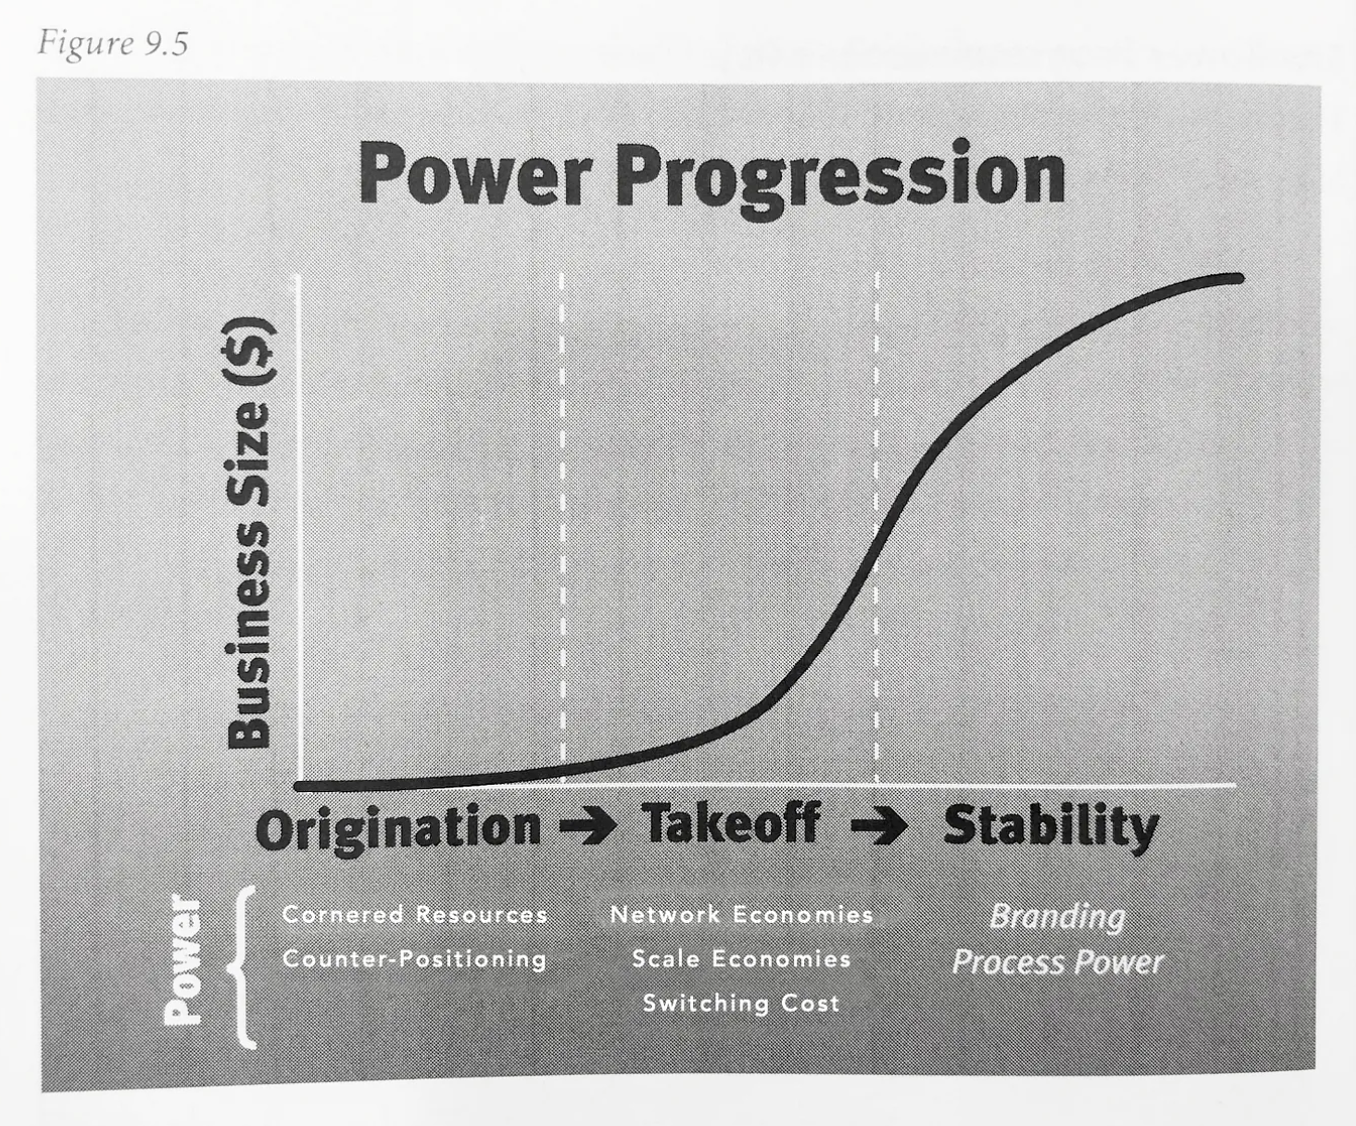 Power progression chart